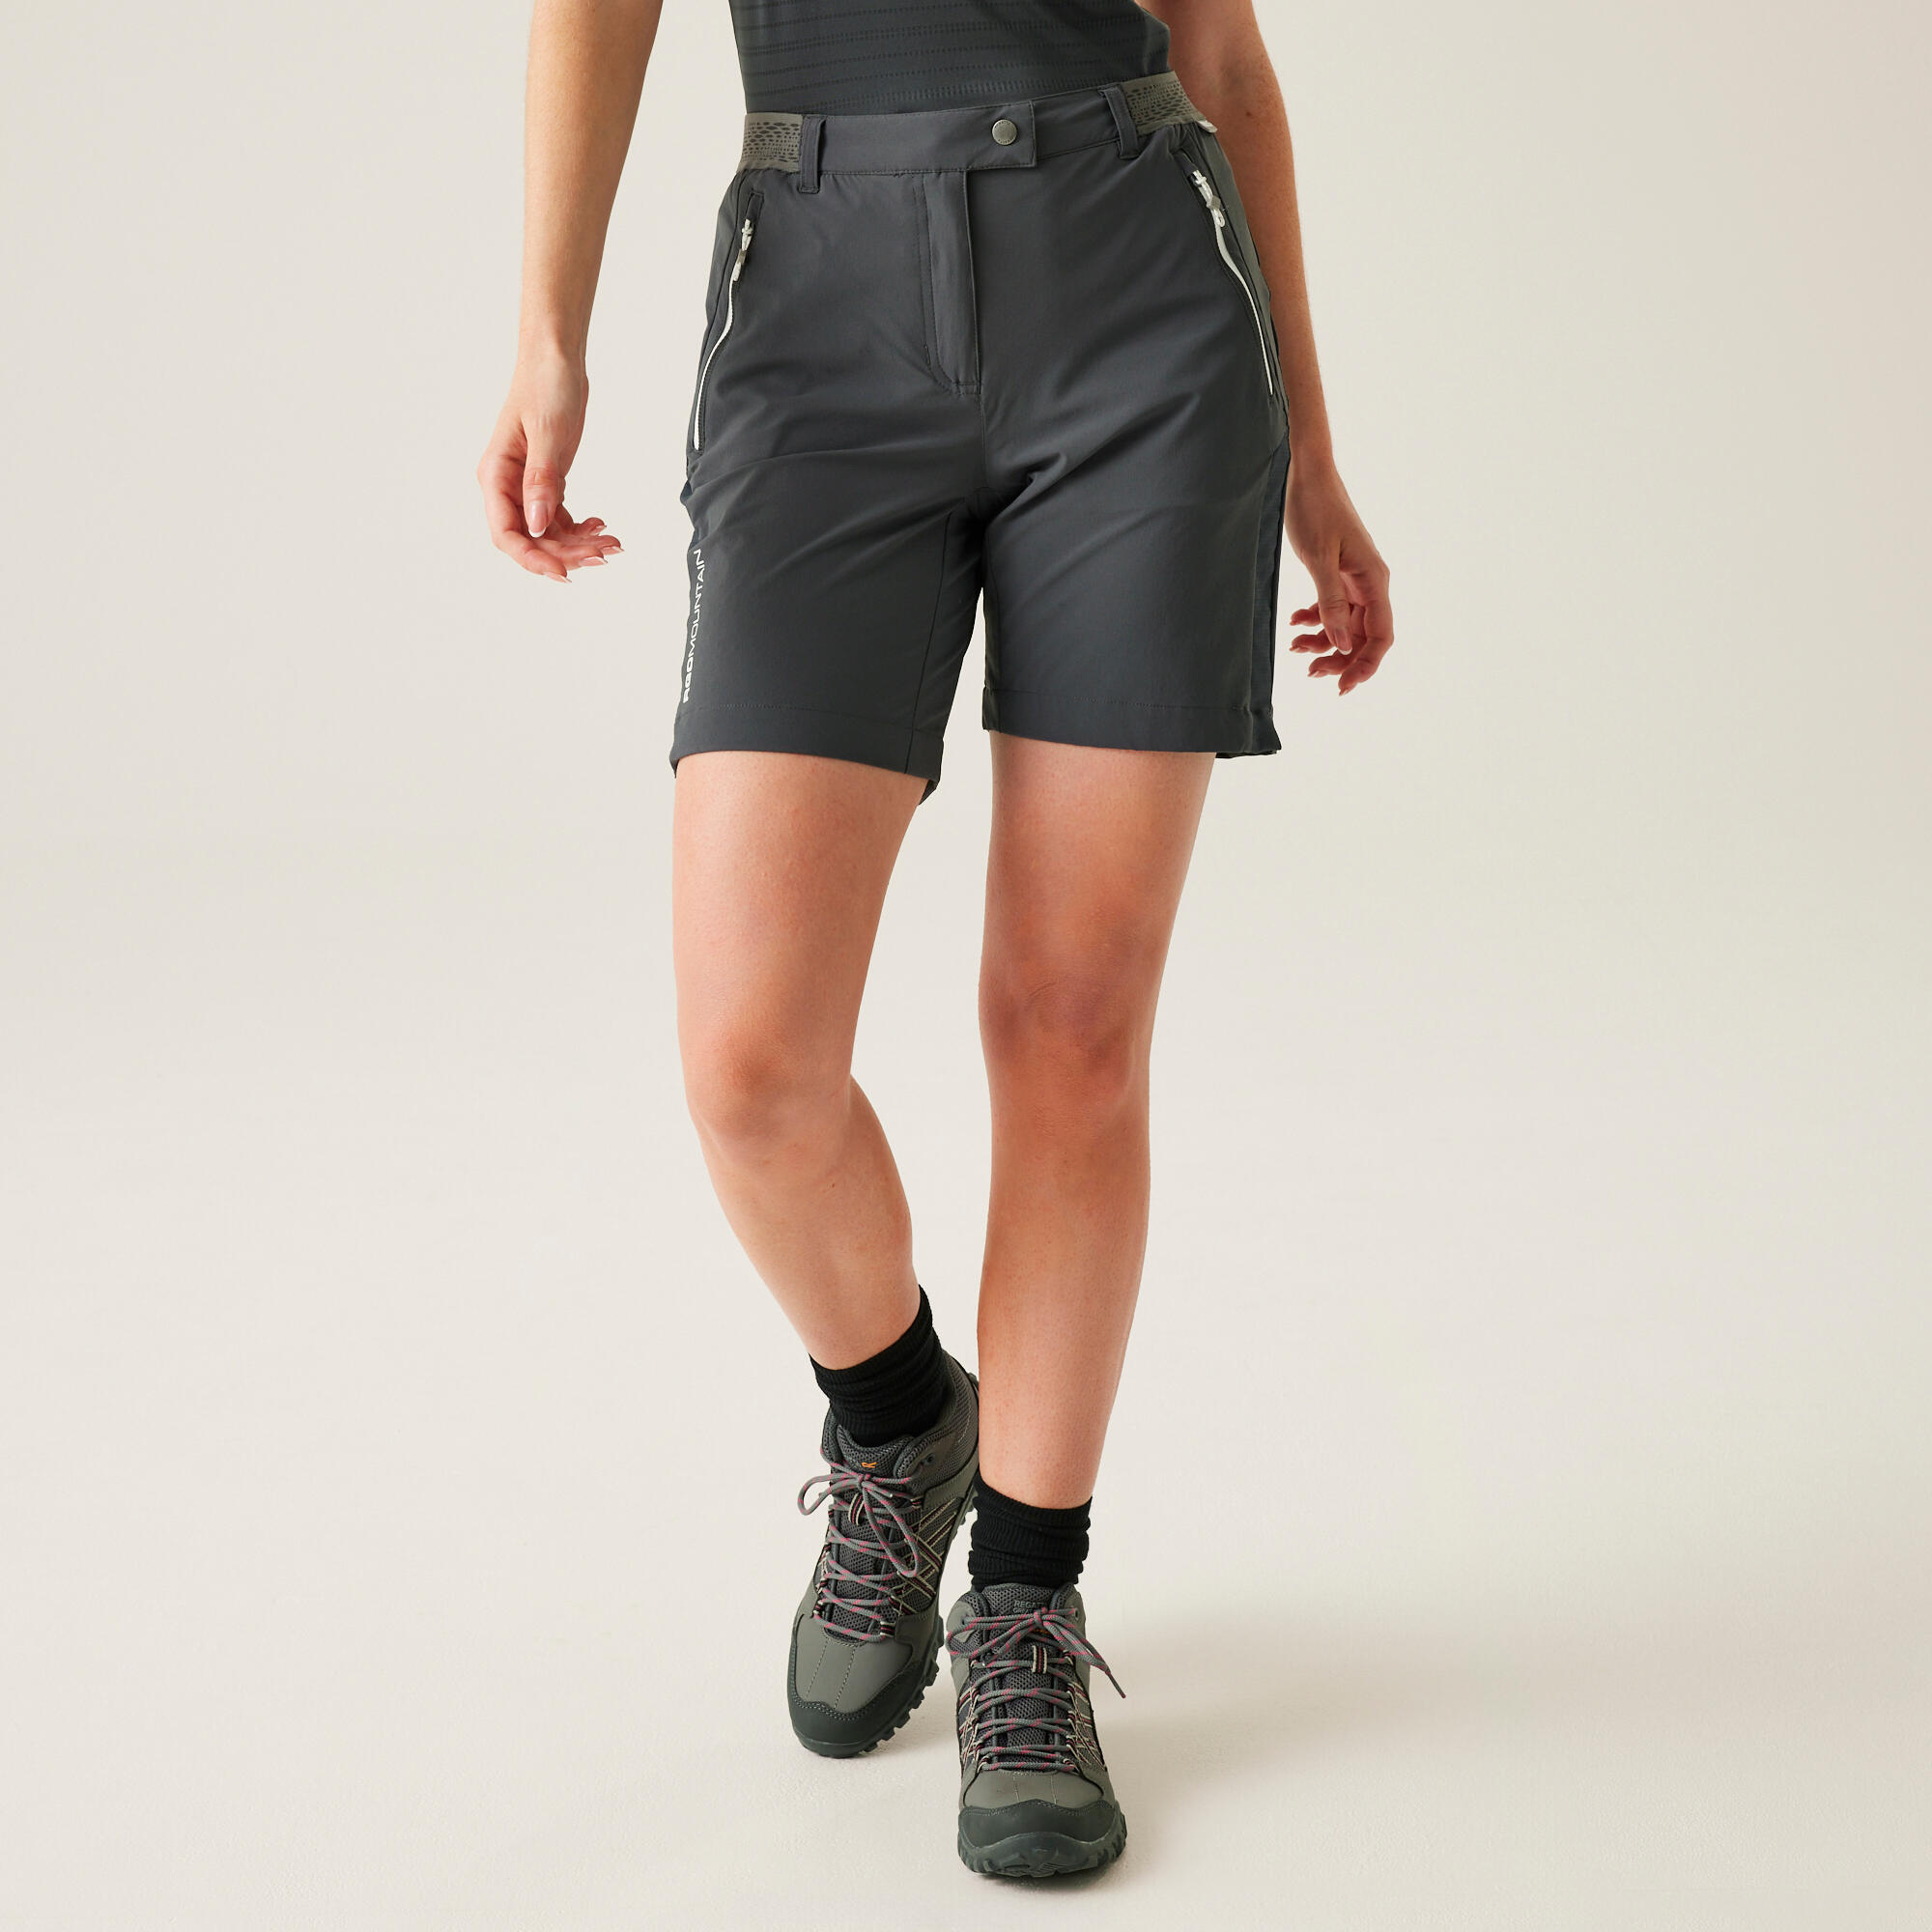 REGATTA Chaska II Women's Hiking Shorts - Mid Grey